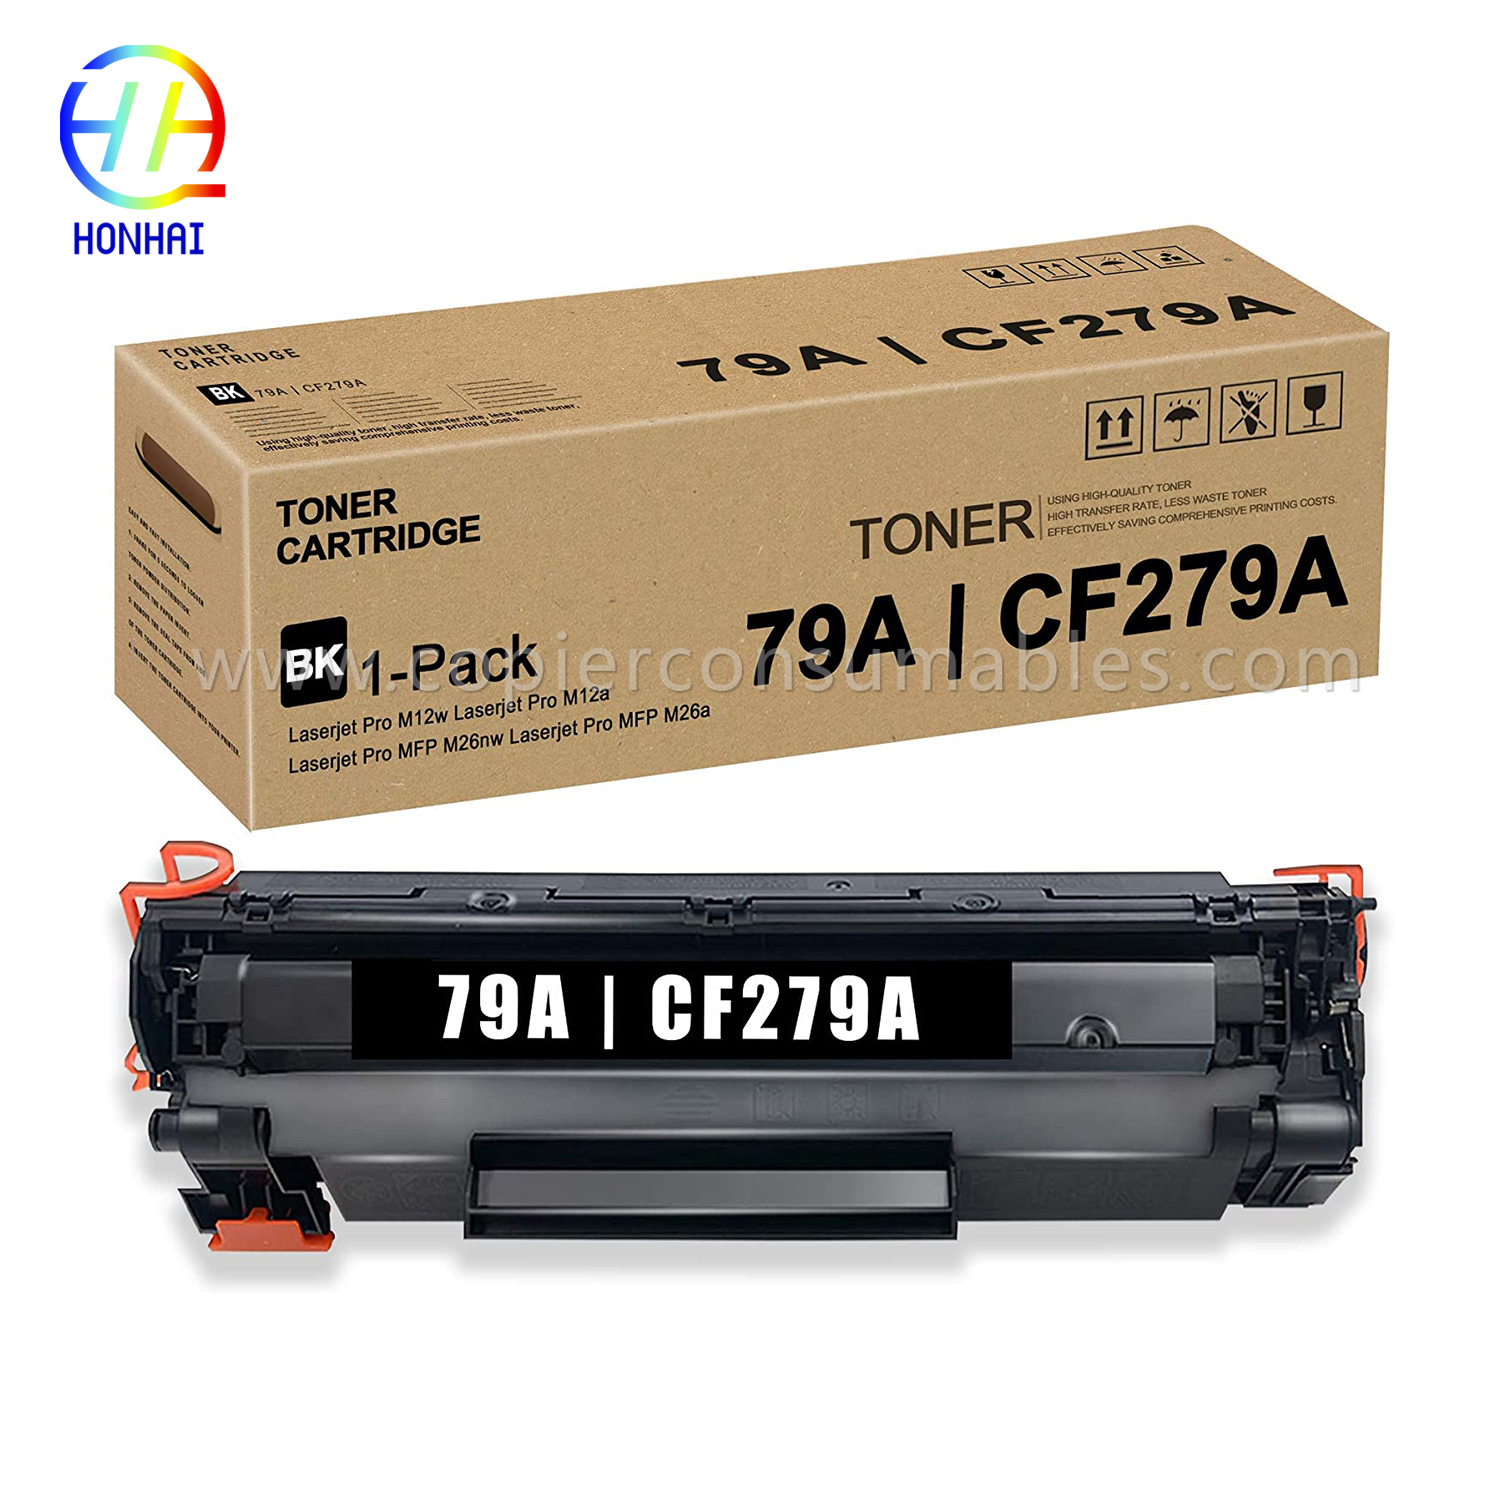 Toner Cartridge for HP Laserjet PRO M12W Mfp M26 M26nw (CF279A) 拷贝